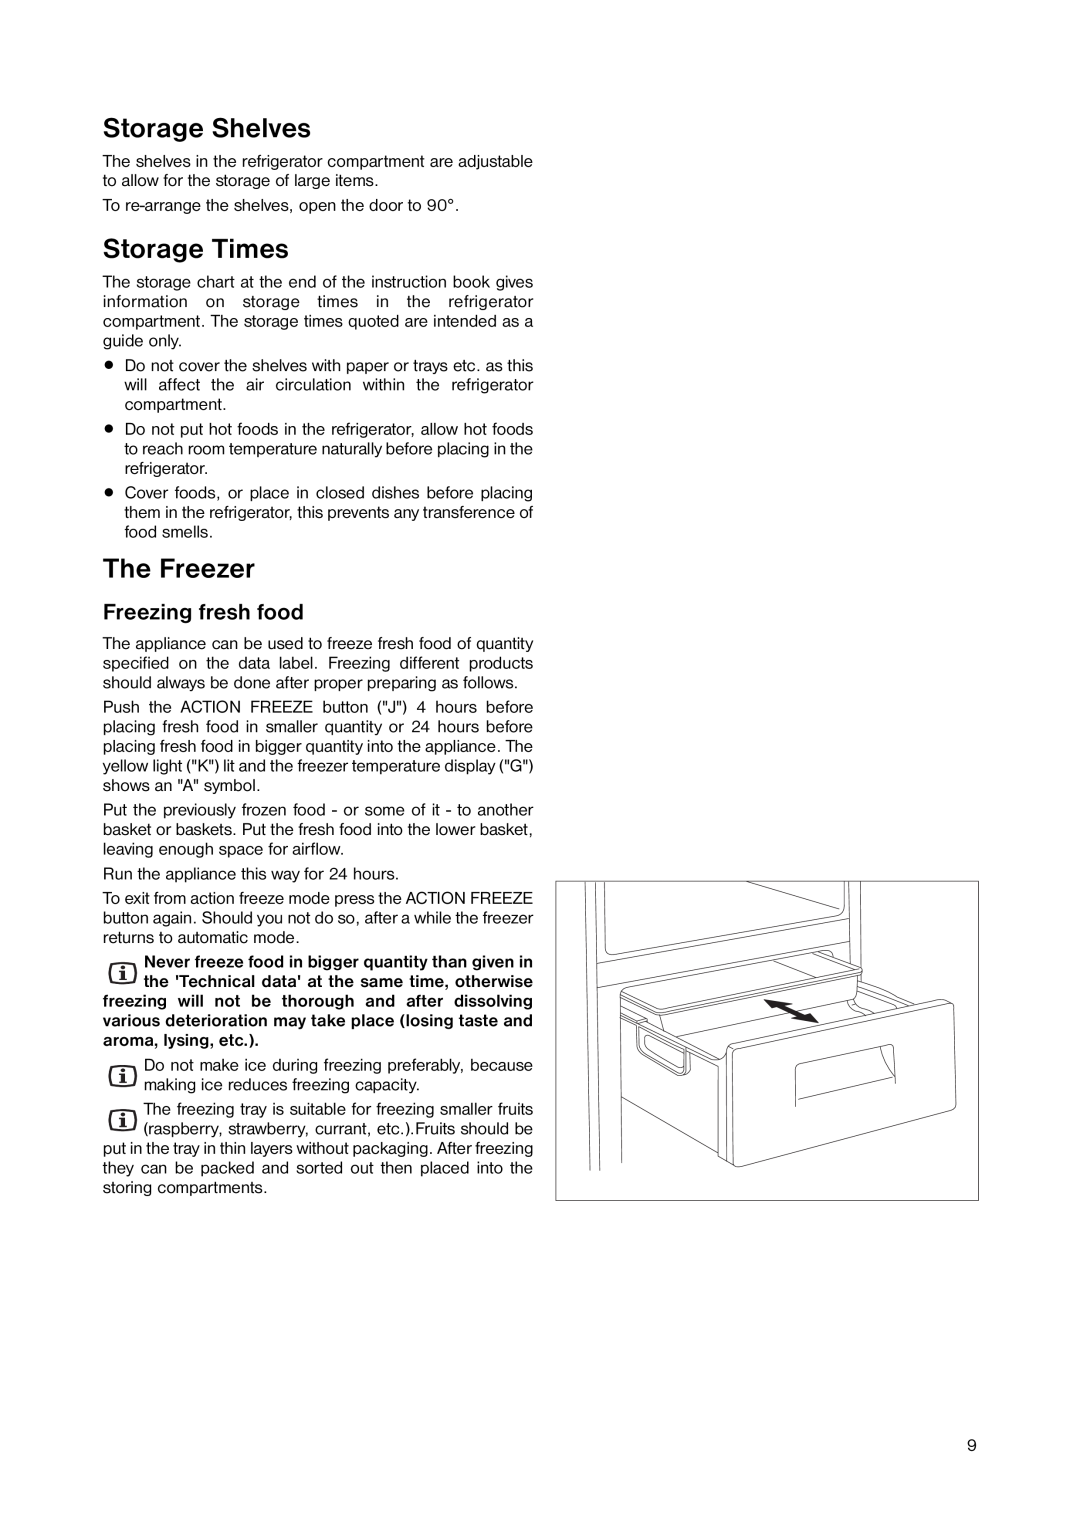 Zanussi ZNB 4051 manual Storage Shelves, Storage Times, The Freezer, Freezing fresh food 